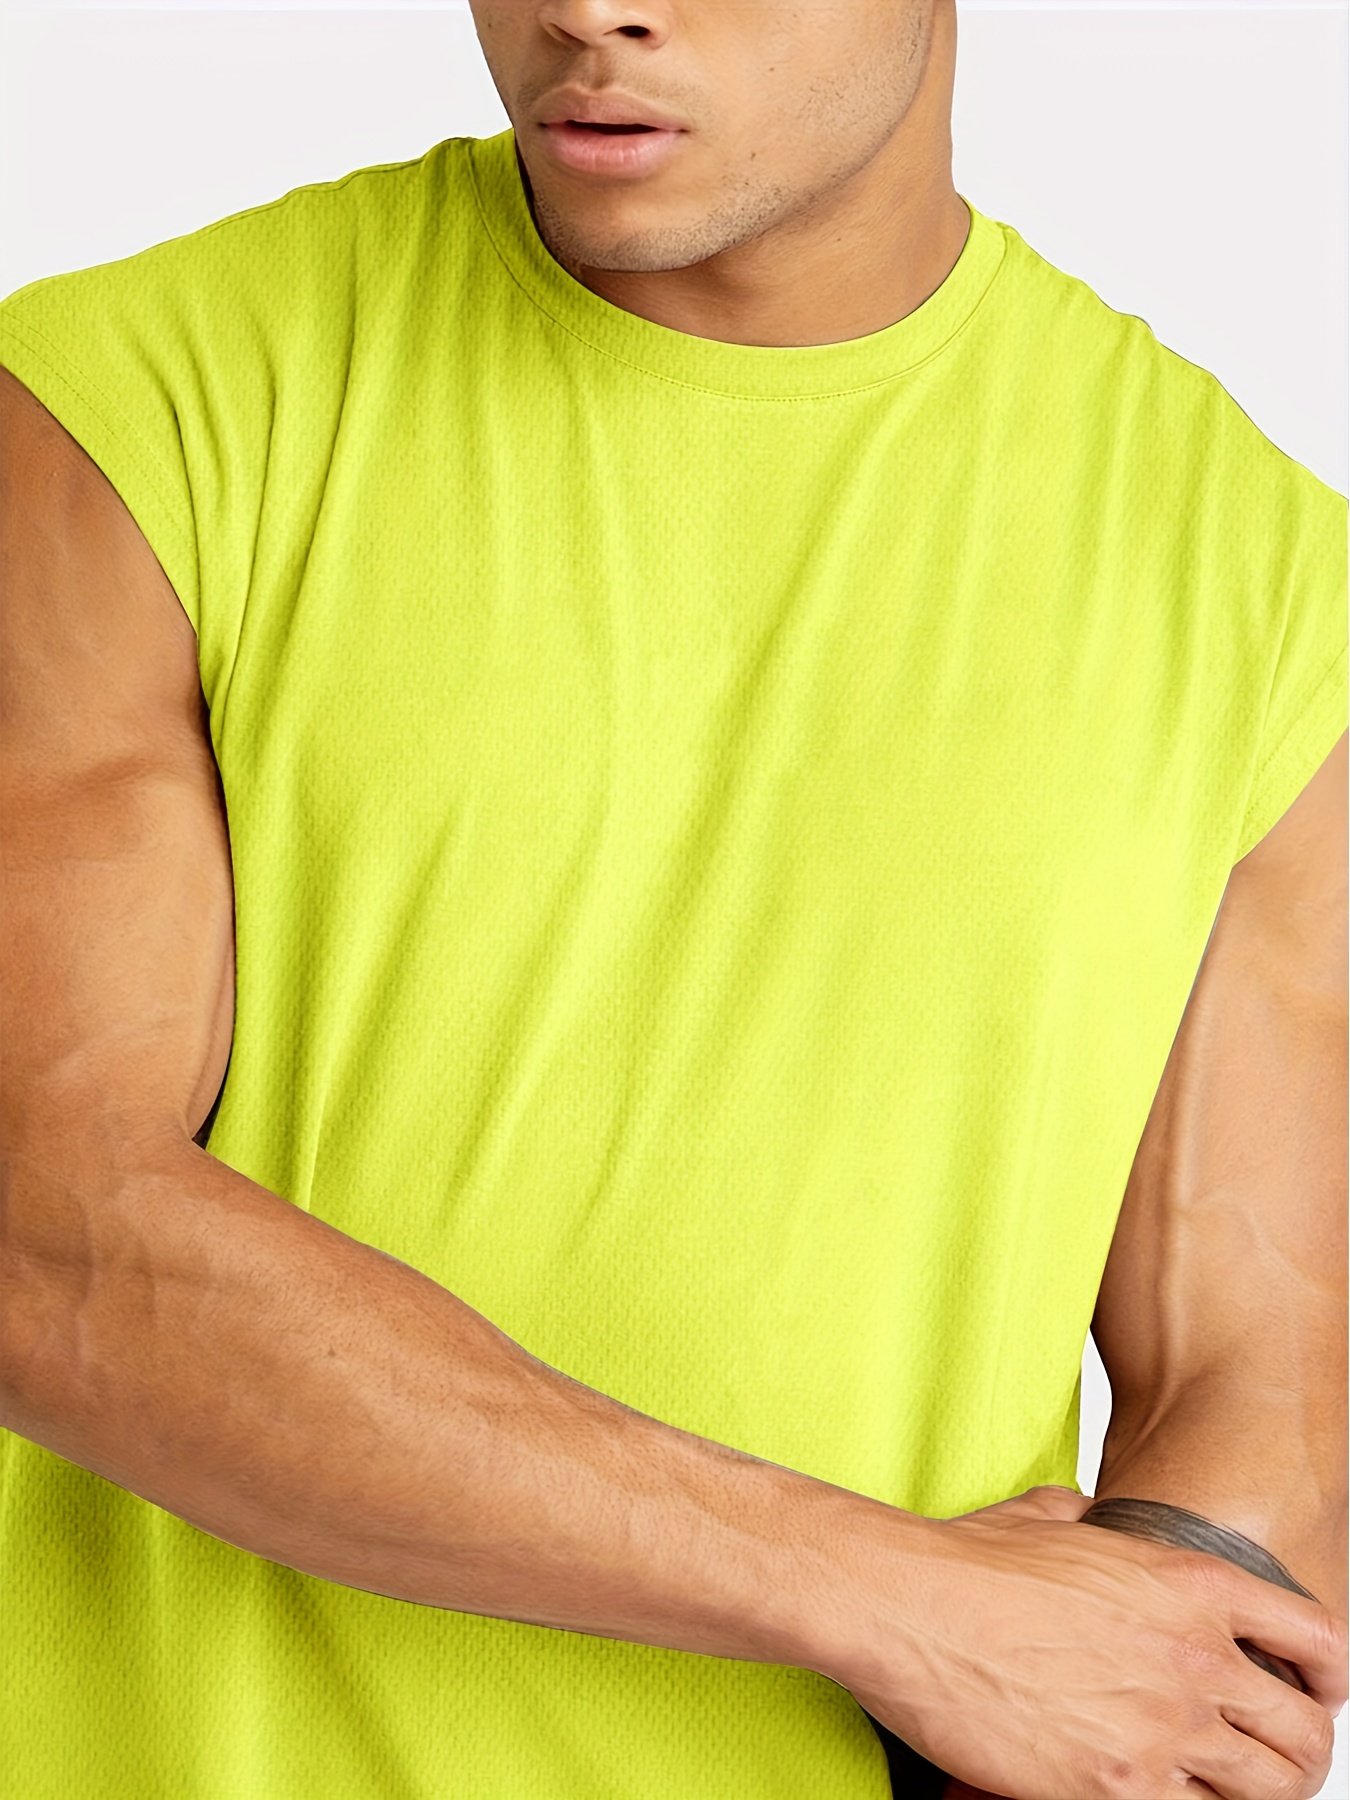 Slim Fit Solid Men's Fitness T Shirt - Men's Fitness Apparel